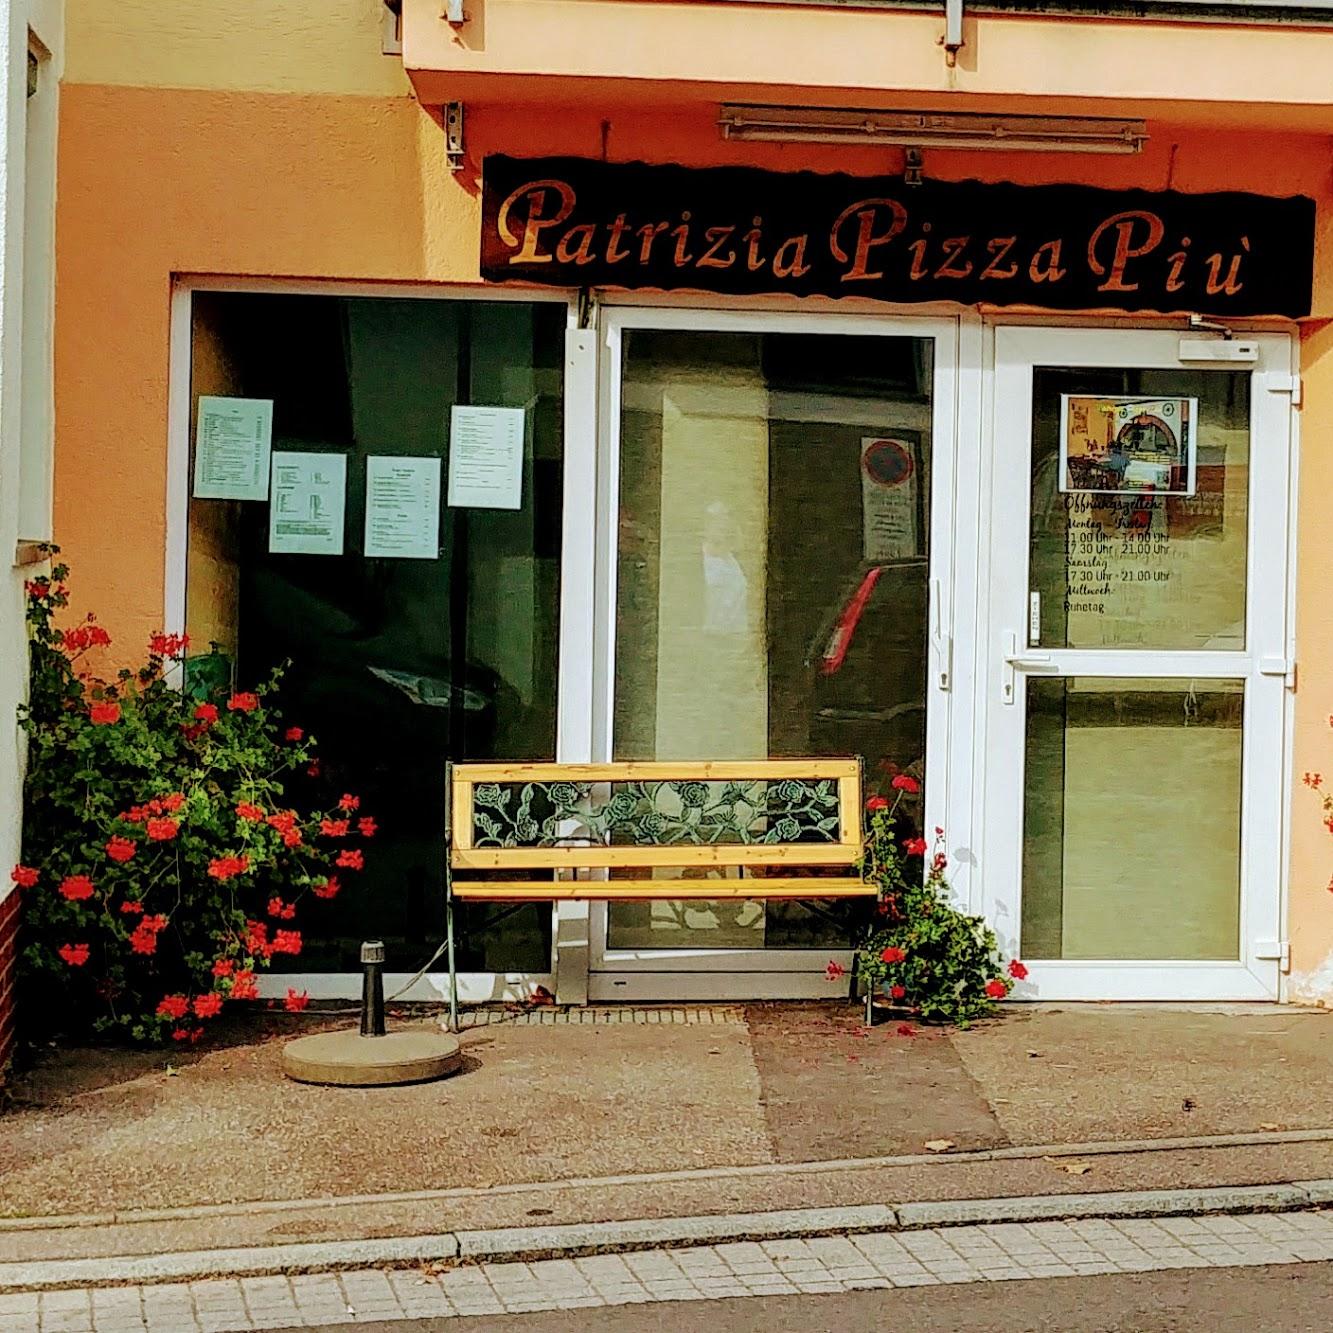 Restaurant "Patrizia Pizza Piu